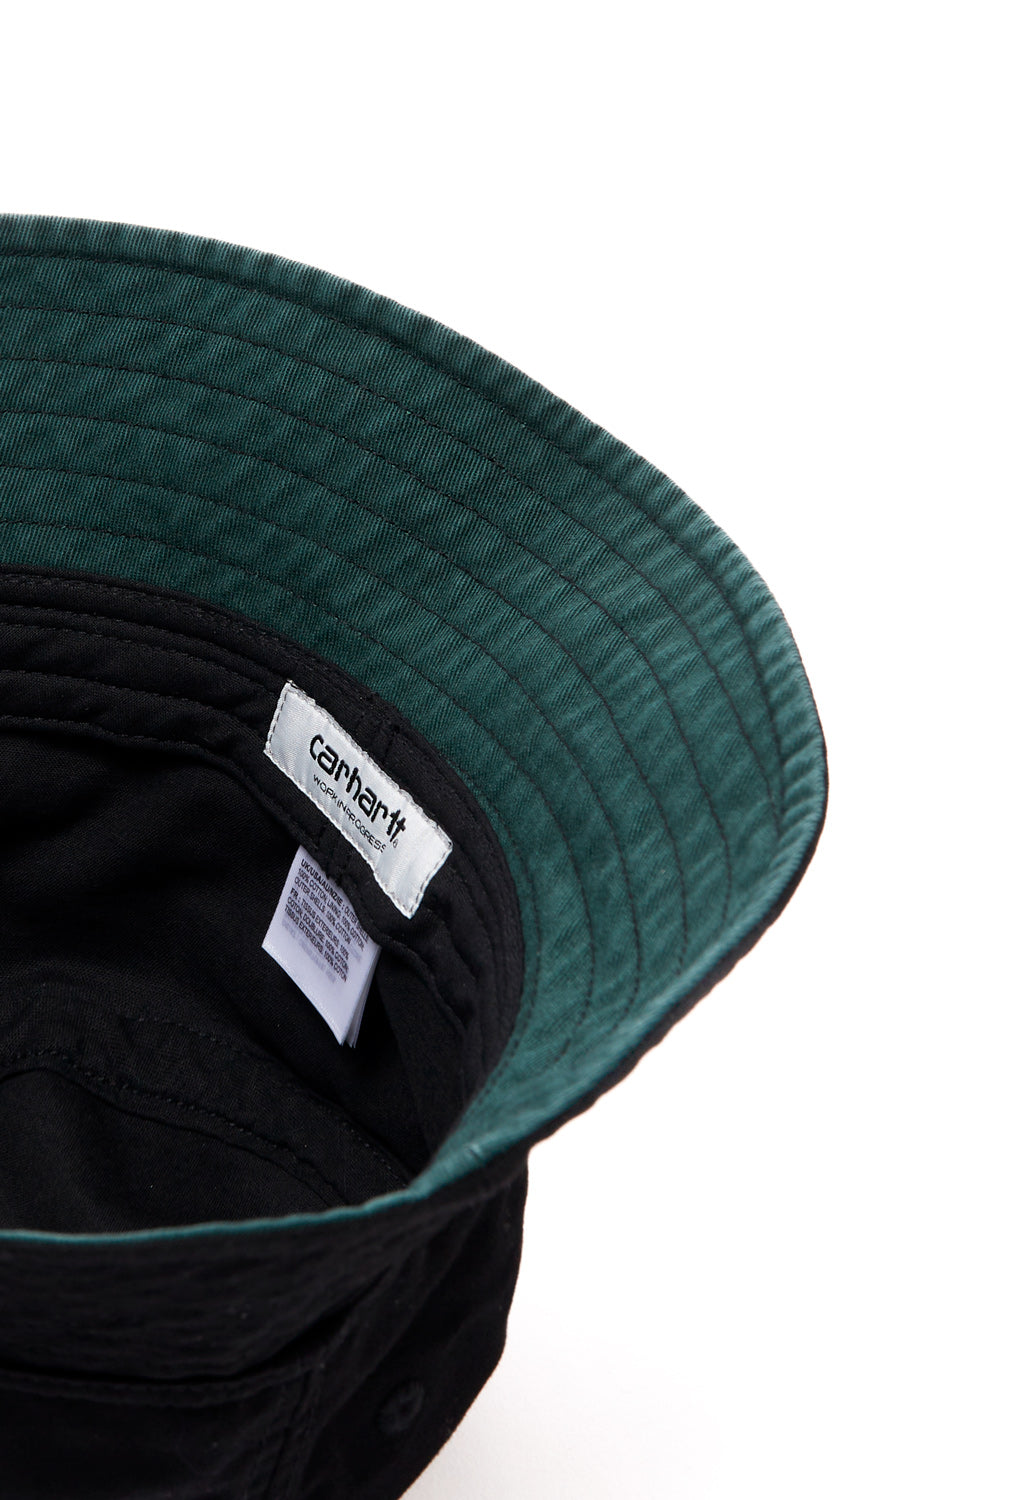 Carhartt WIP Heston Bucket Hat - Black/Discovery Green